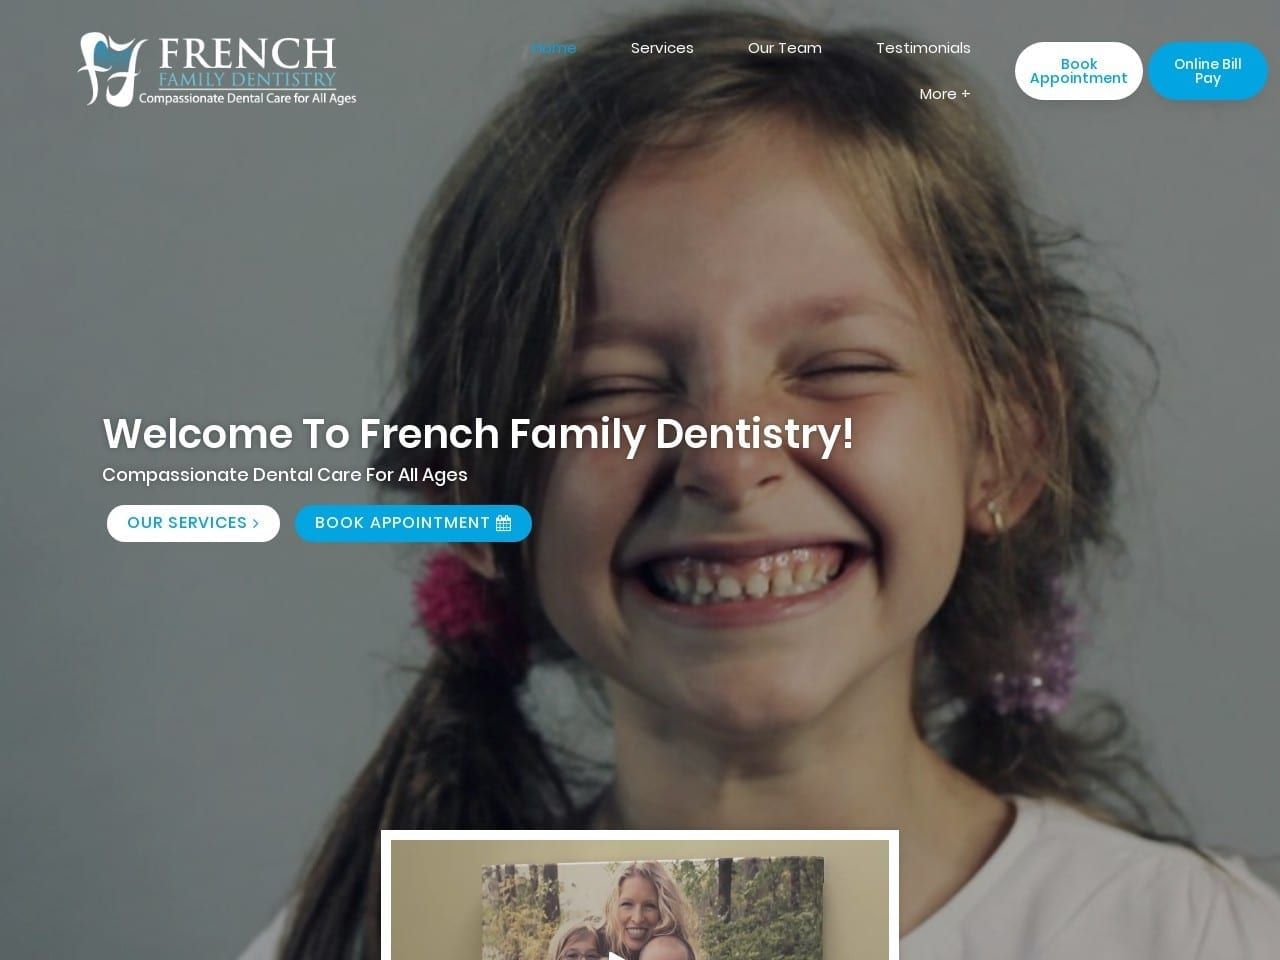 French Family Dentist Website Screenshot from frenchfamilydentistry.com